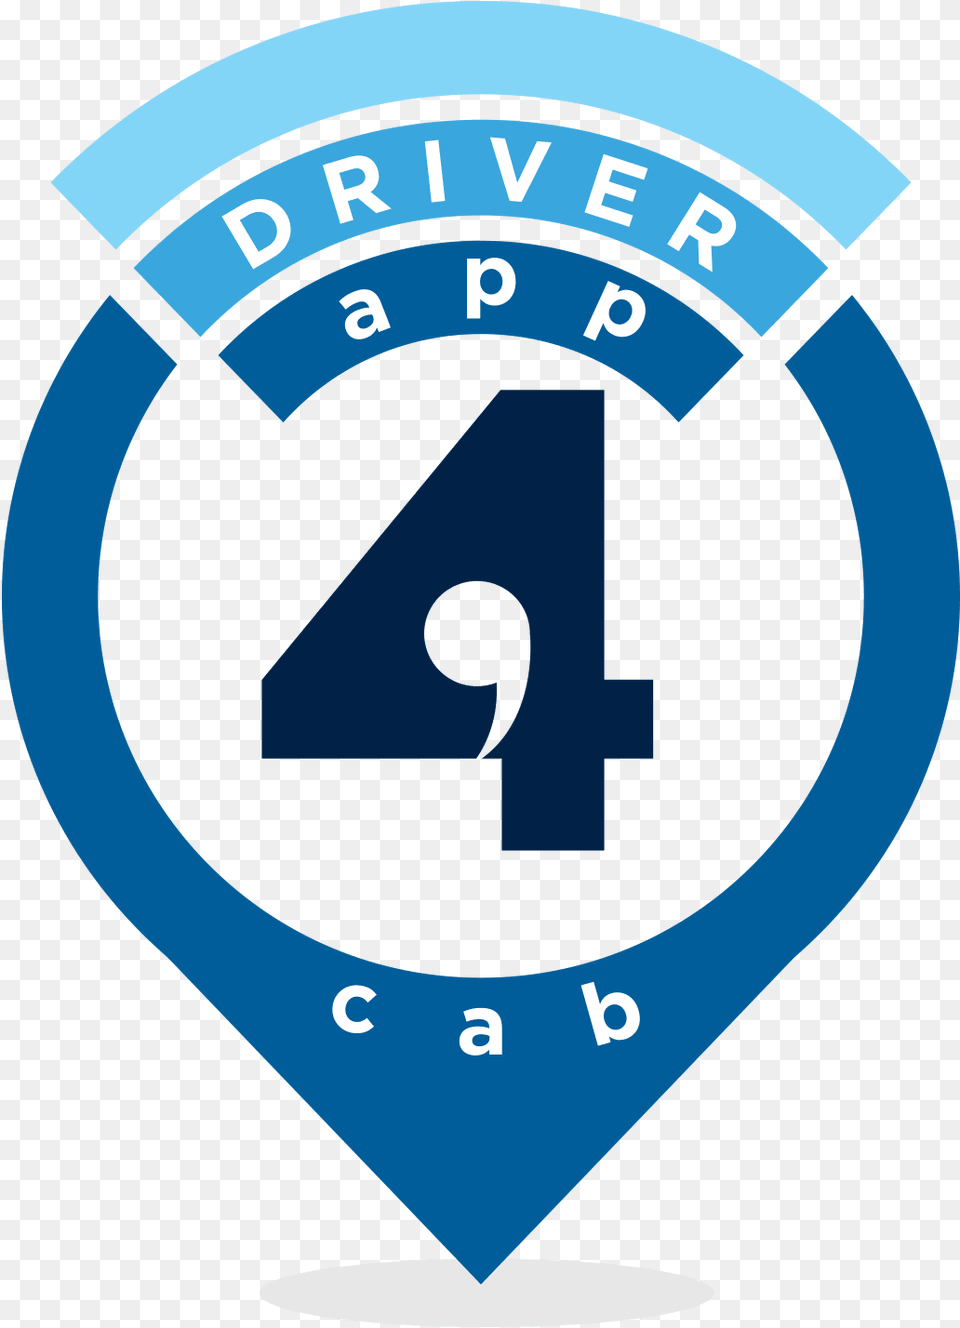 Taxi App Like Uber Request Demo Emblem Free Png Download